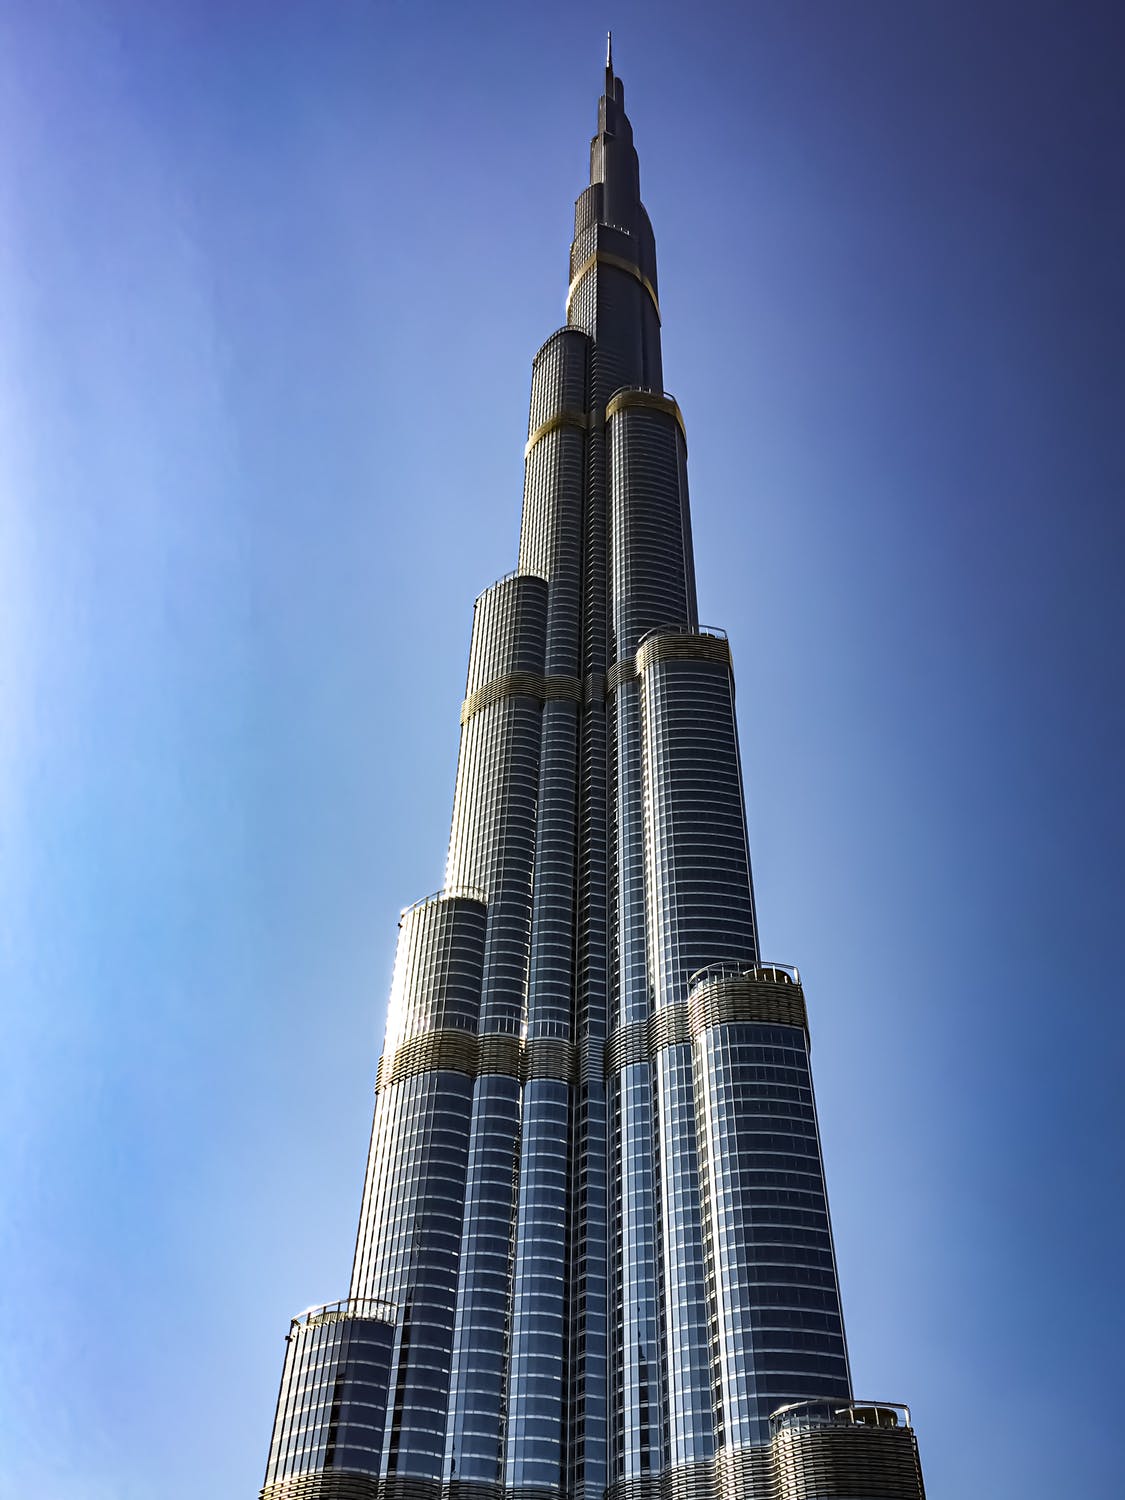 Башня бурдж халифа этажей. Башня Бурдж Халифа. Башня Бурж залип в Дубаи. Здание Бурдж Халифа. Бурдж Халифа 2010.